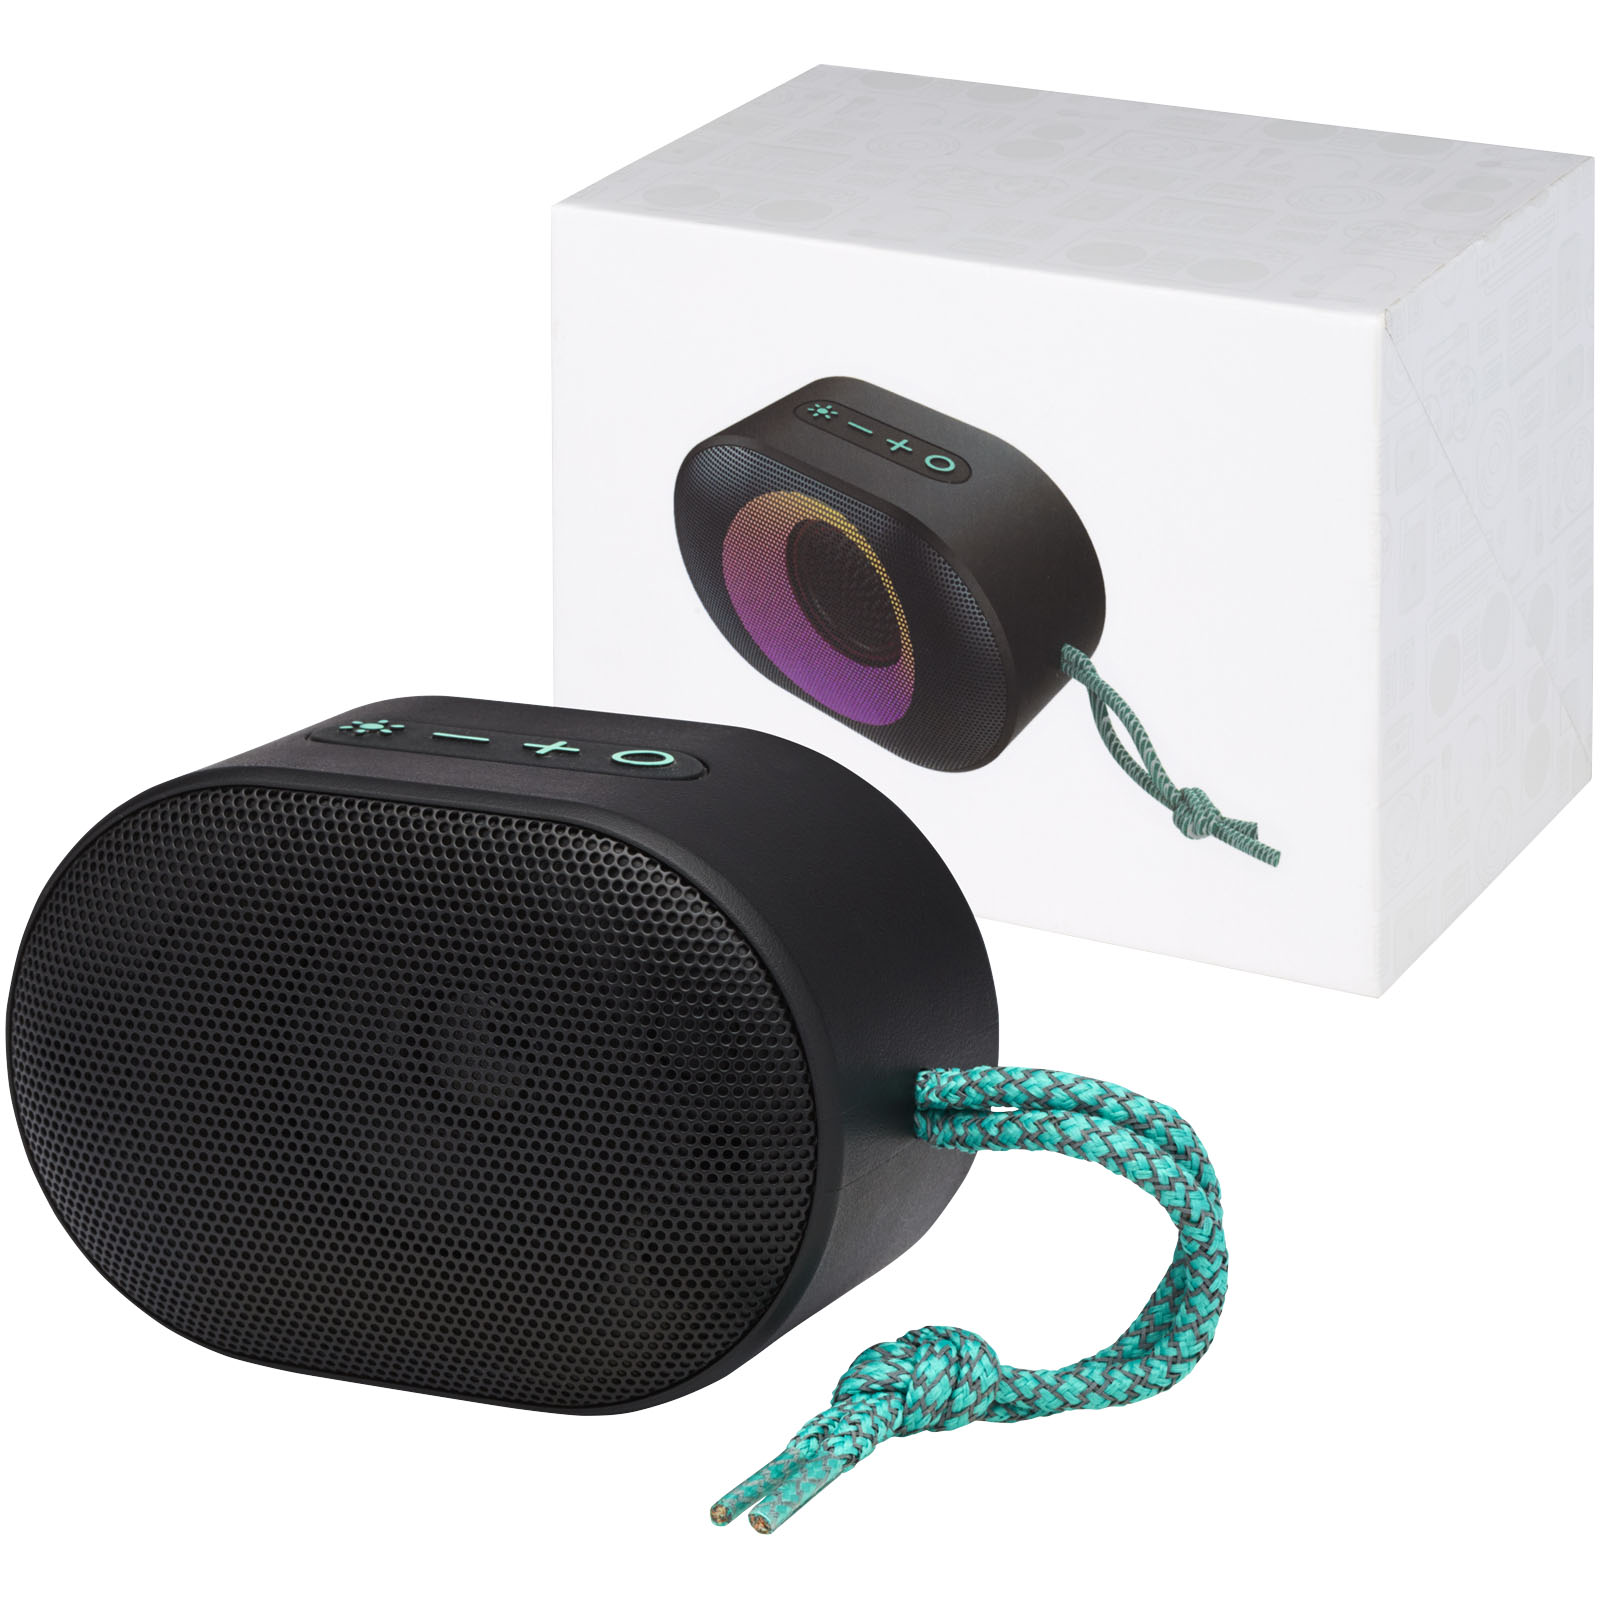 Speakers - Move IPX6 outdoor speaker with RGB mood light